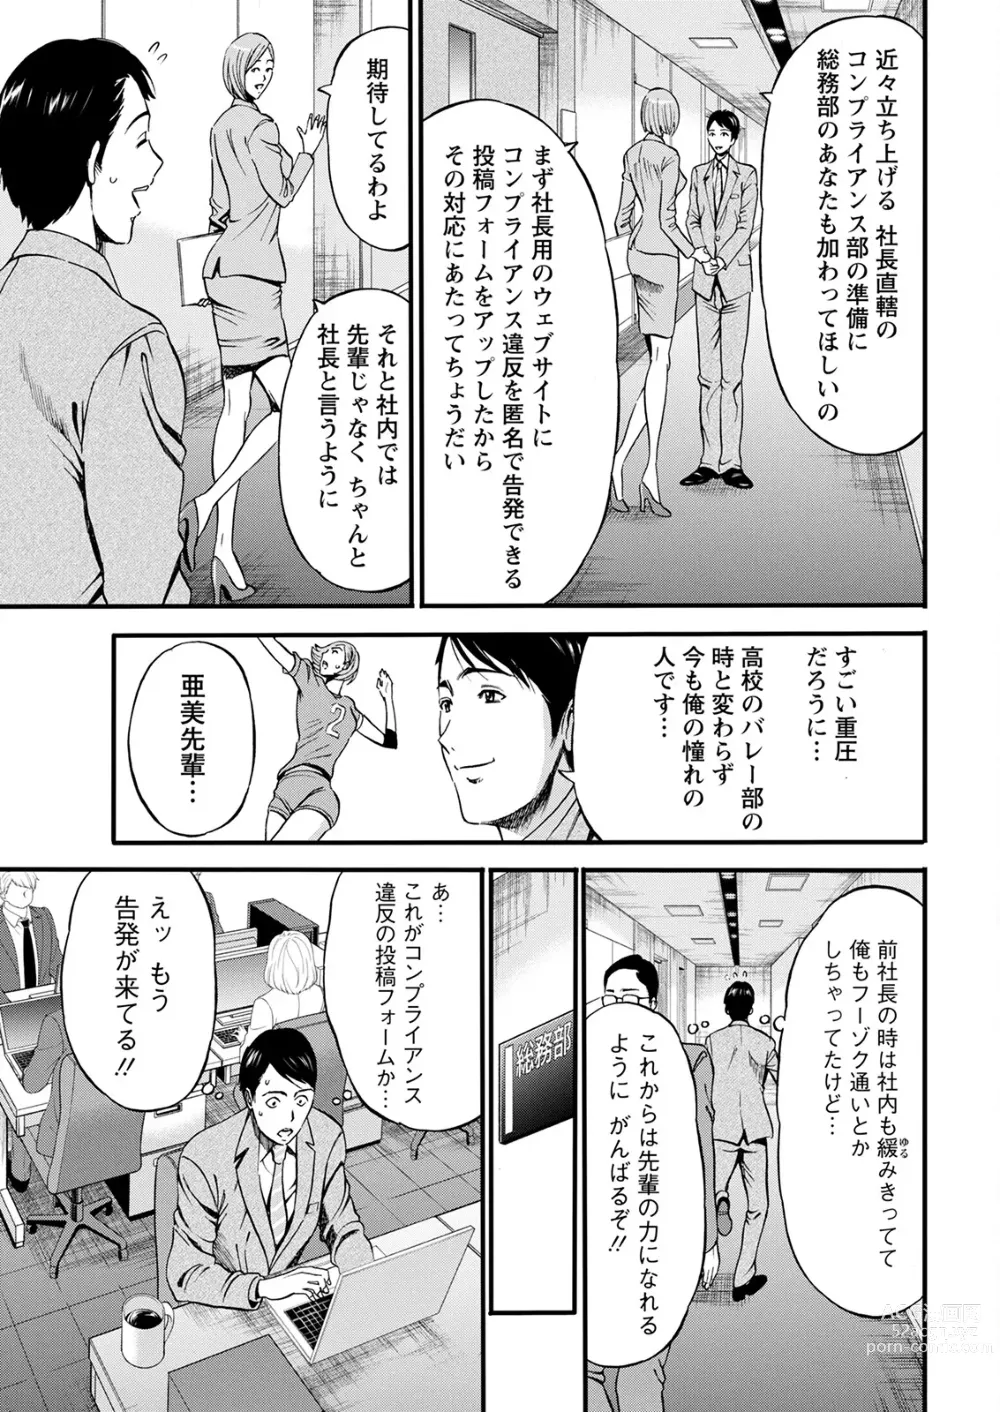 Page 8 of manga Compliance Yuruyuru Chimarisan 1-9